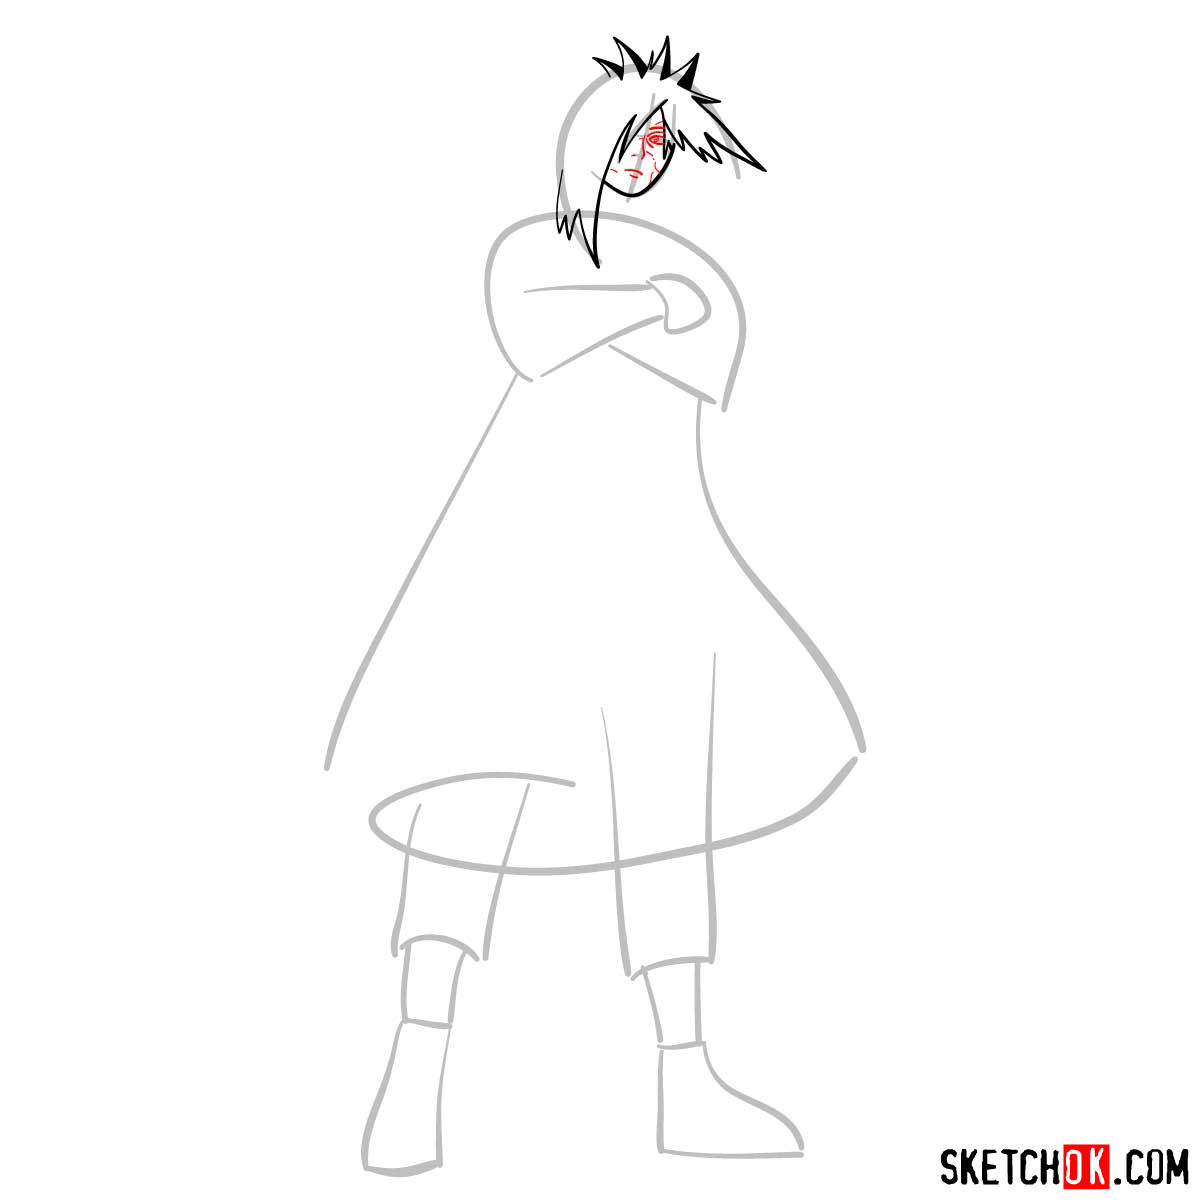 How to draw Madara Uchiha from Naruto anime - step 05